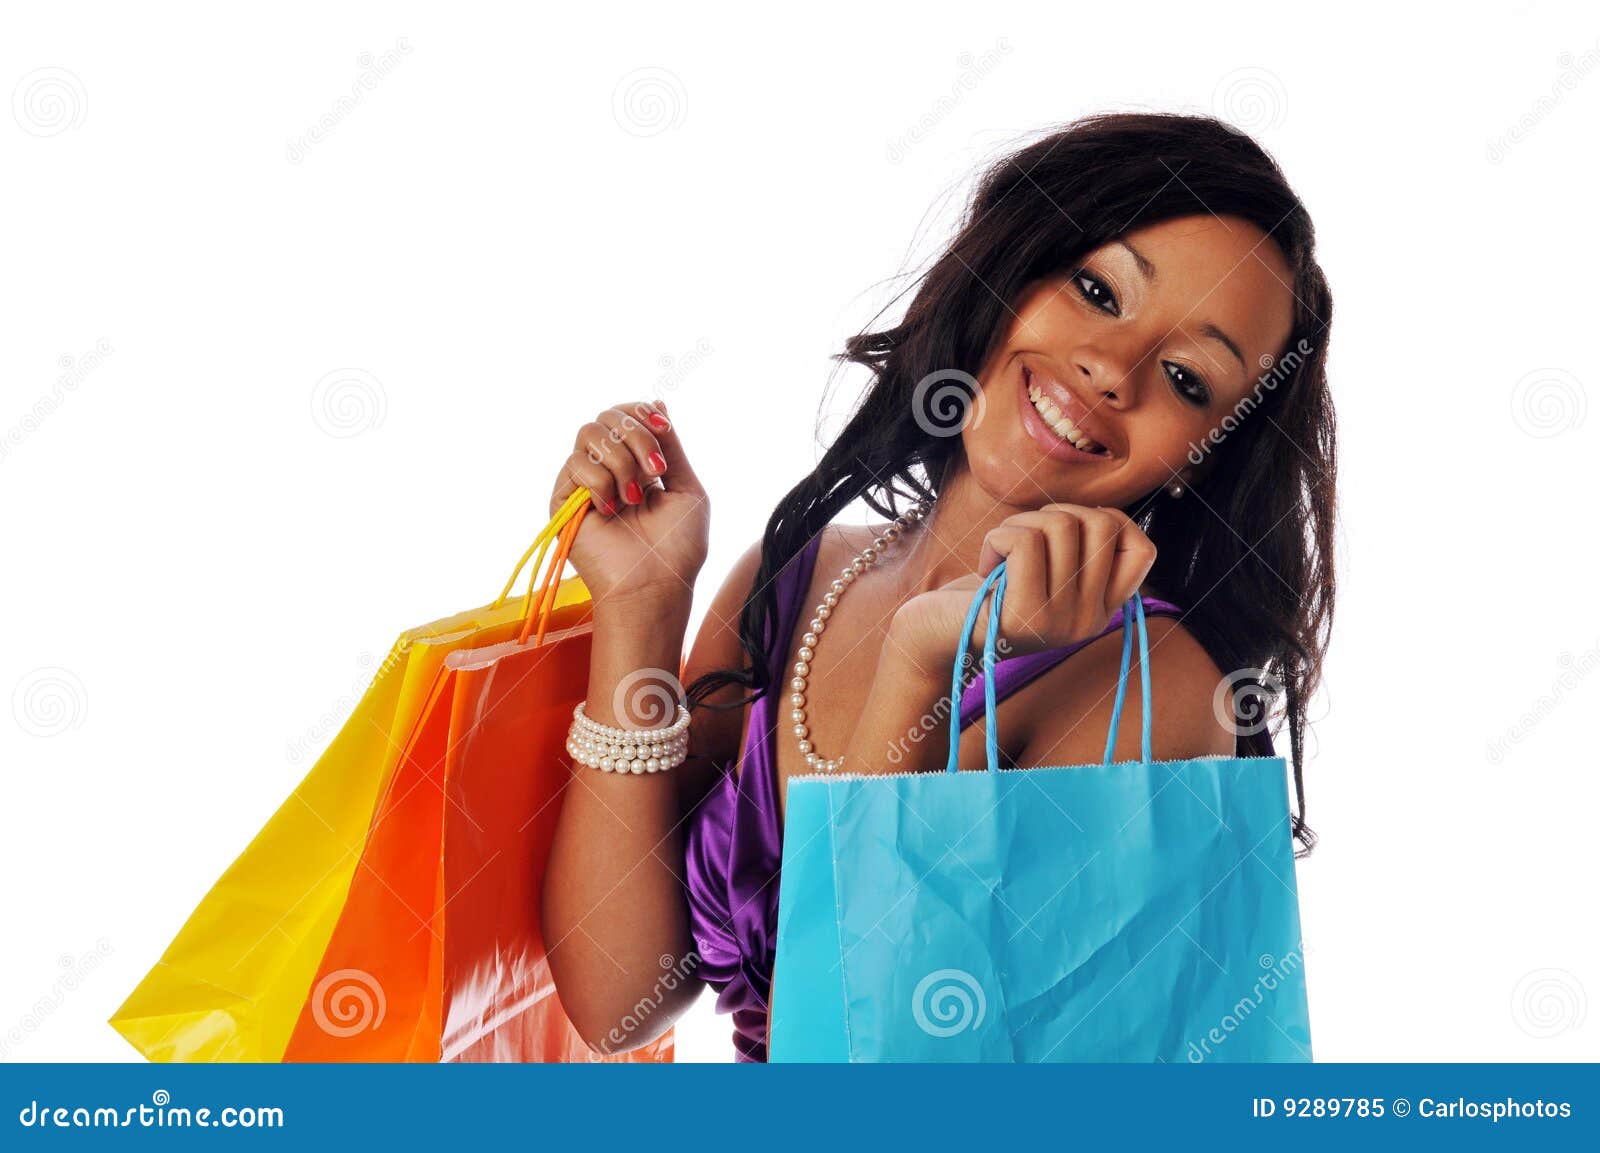 african american shopper